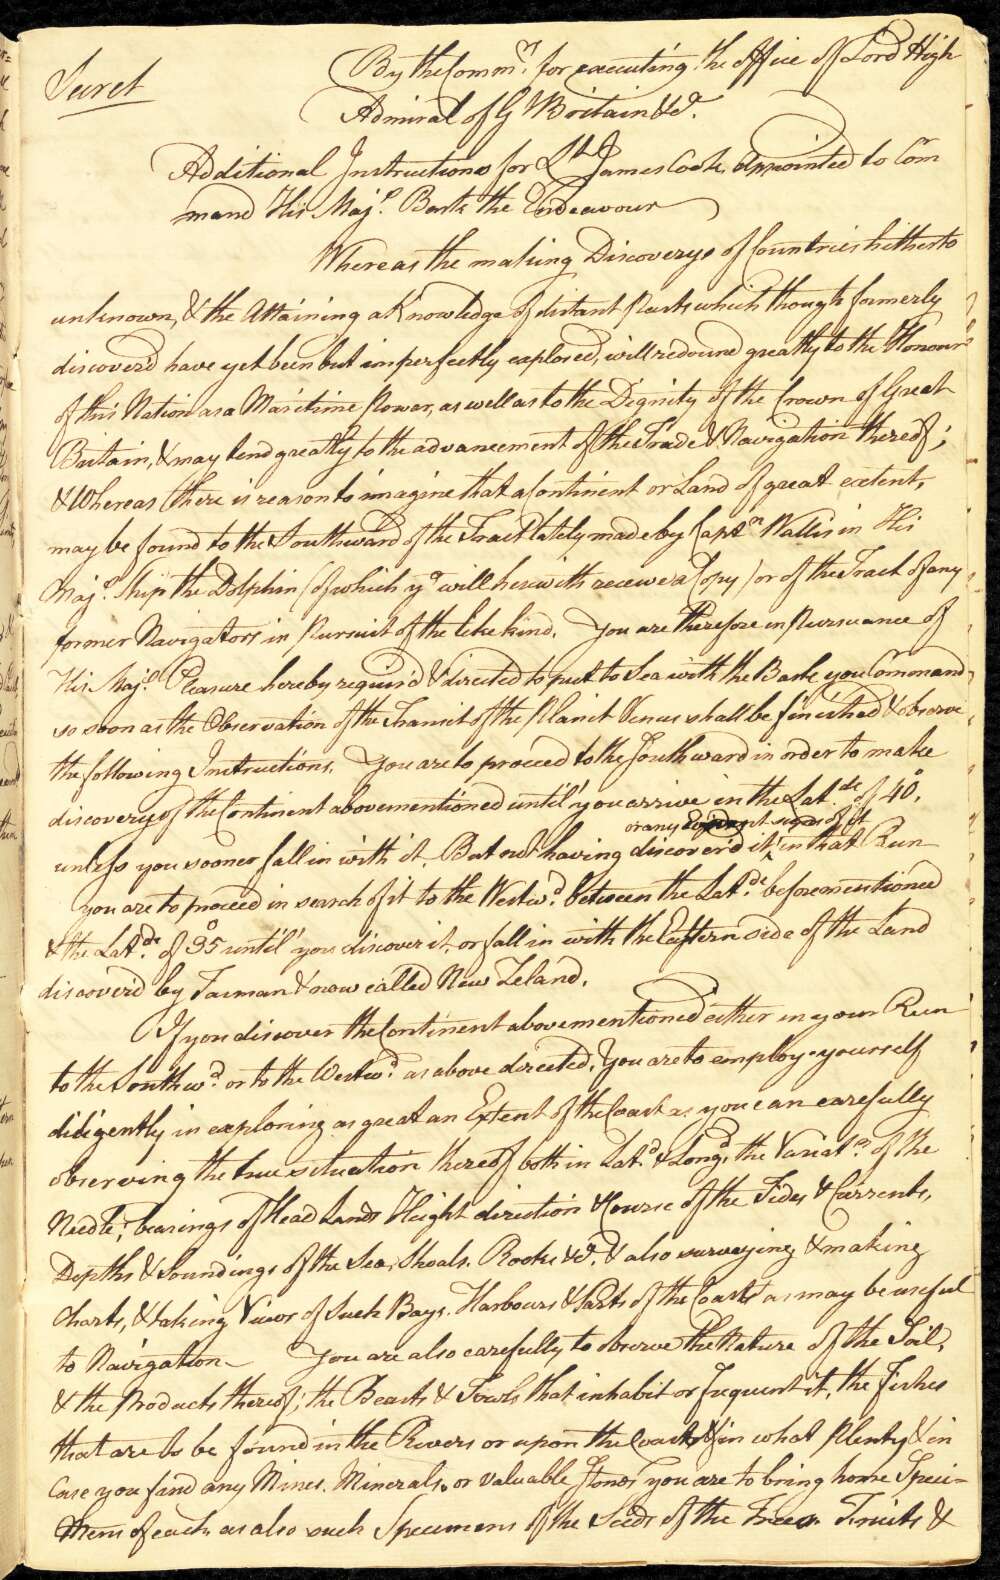 A handwritten letter to Captain James Cook marked 'secret'